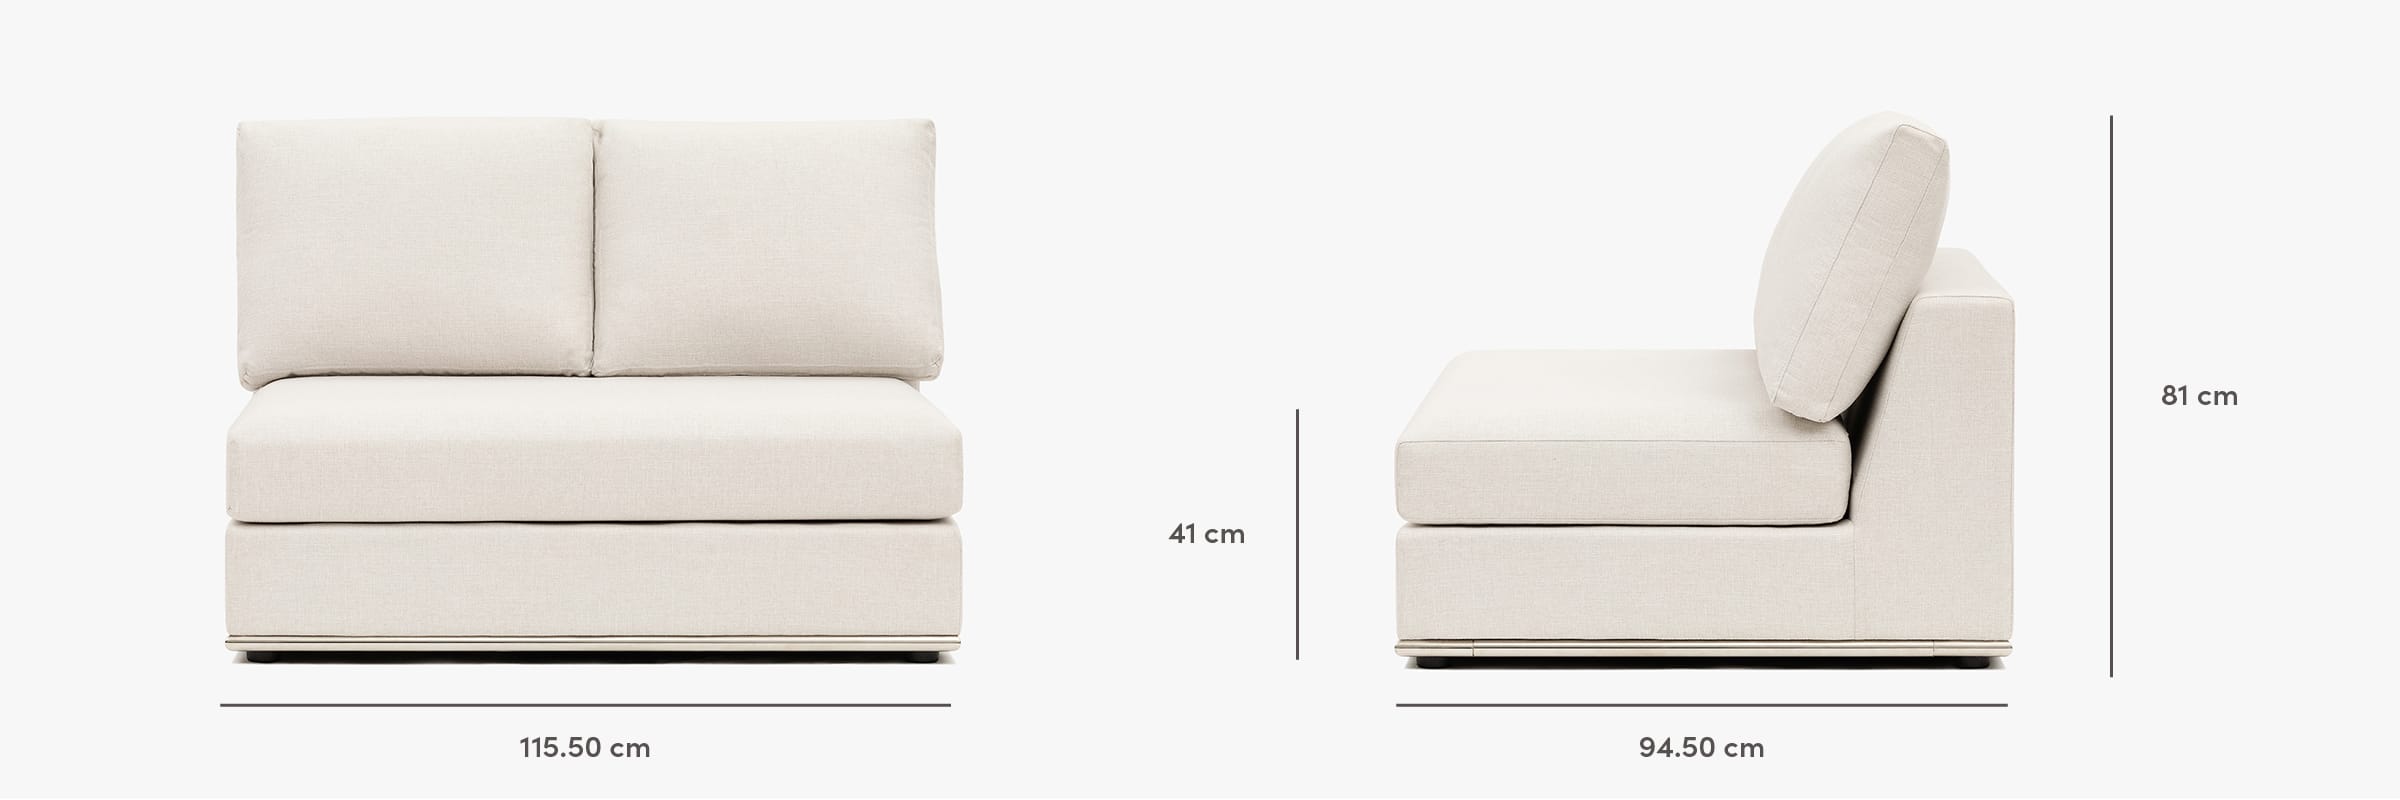 Flow armless sofa dimensions